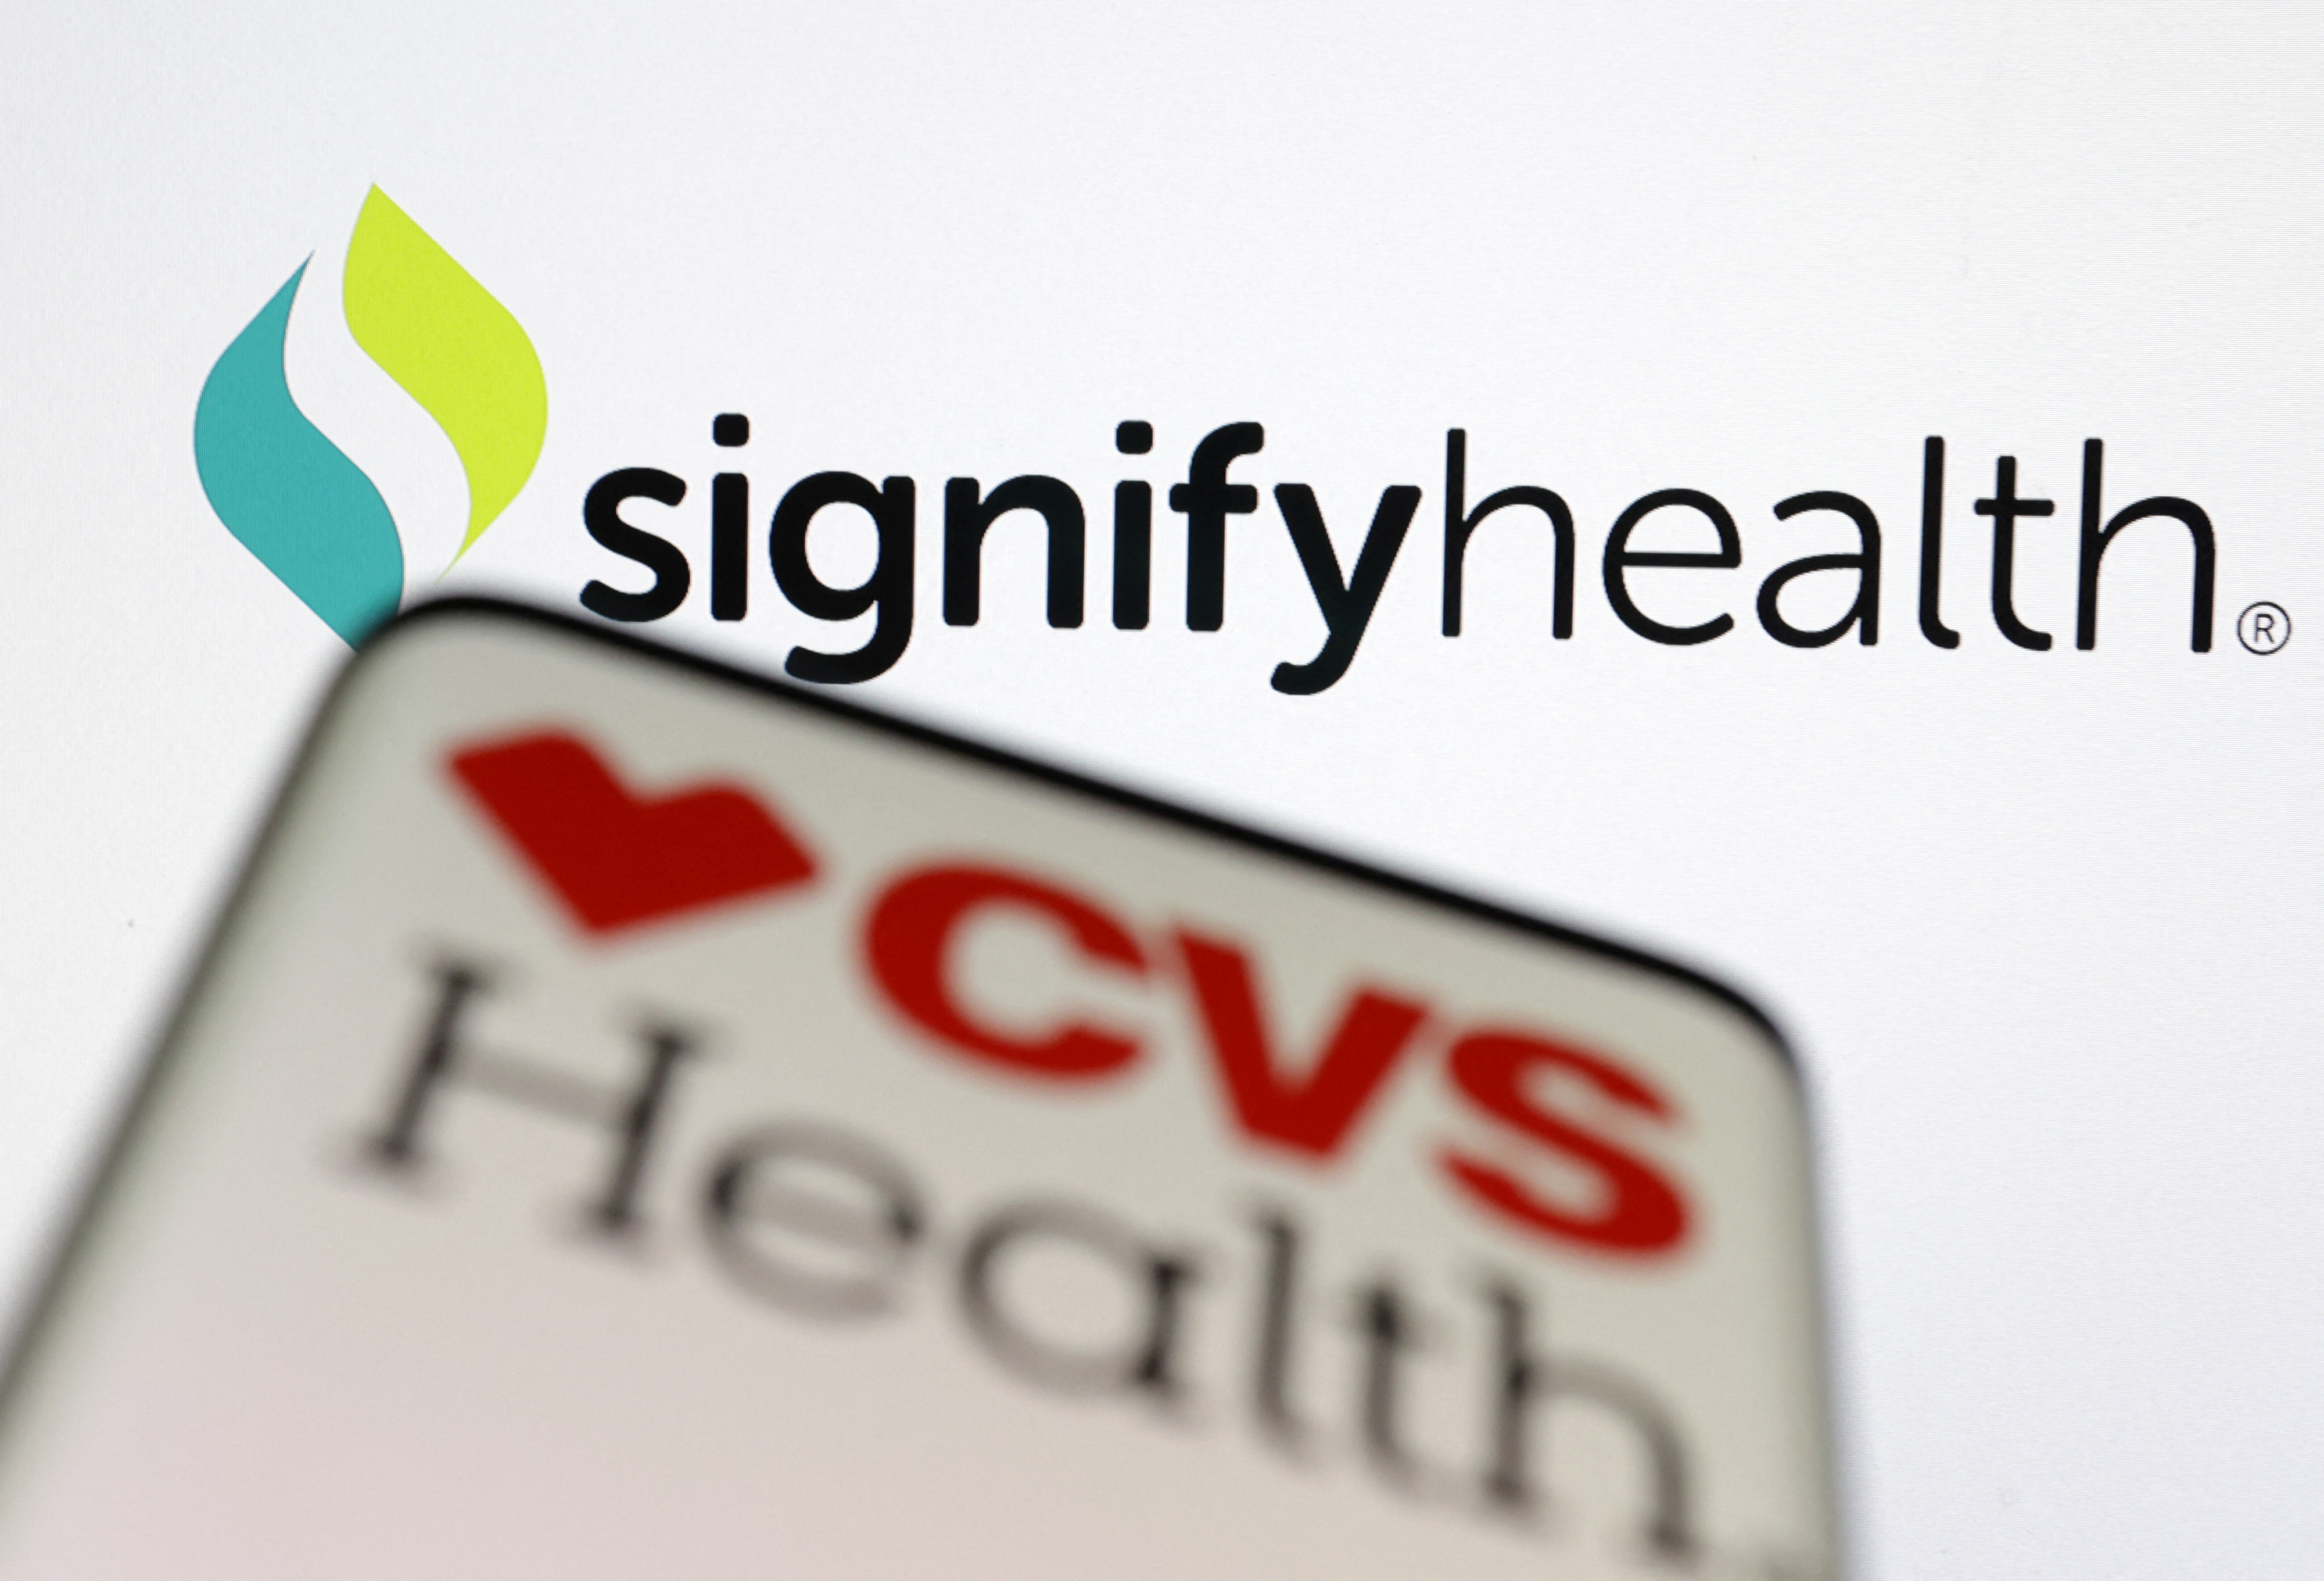 Illustration shows CVS Health and Signifyhealth logos